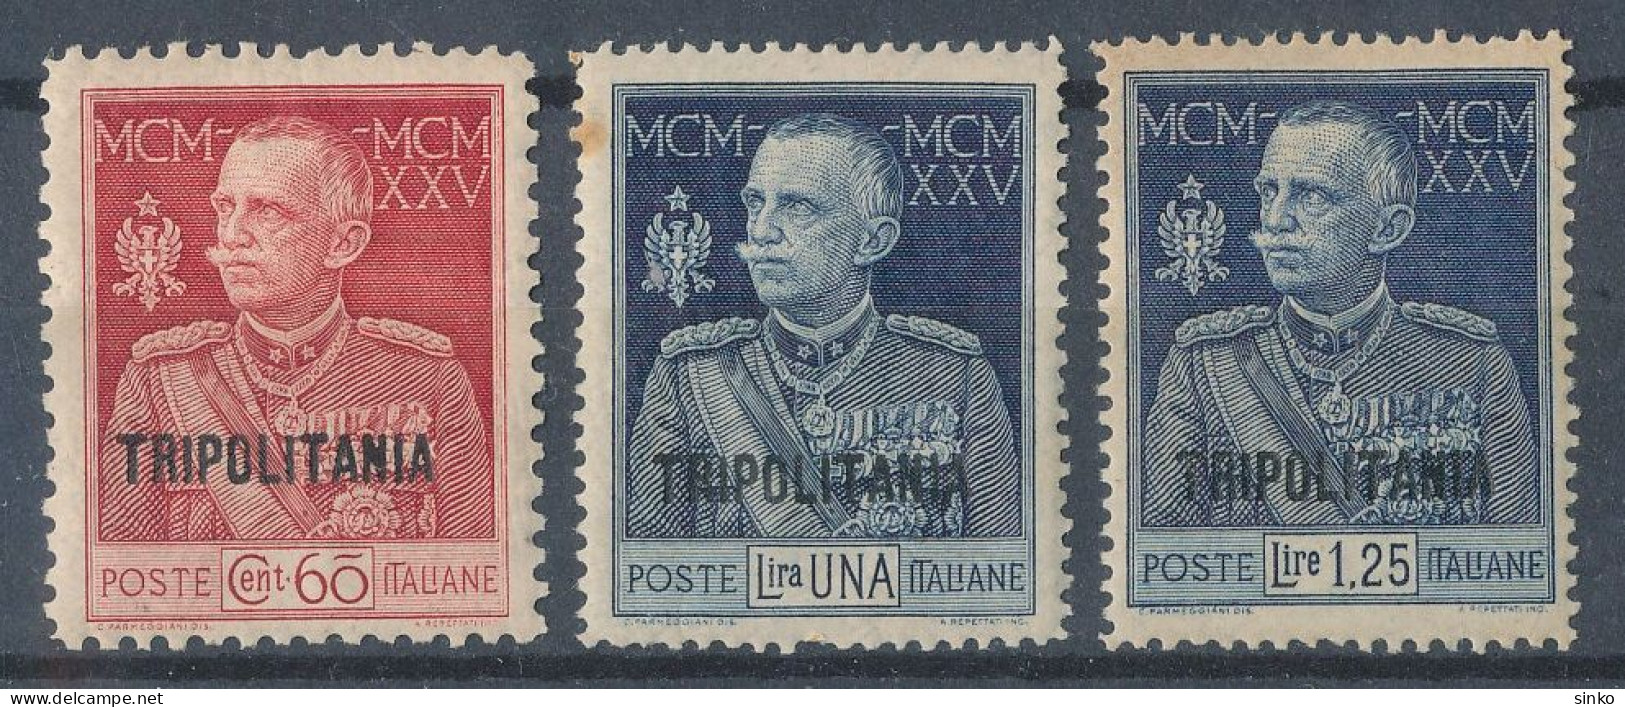 1925/26. Italian Tripolitania - Tripolitania